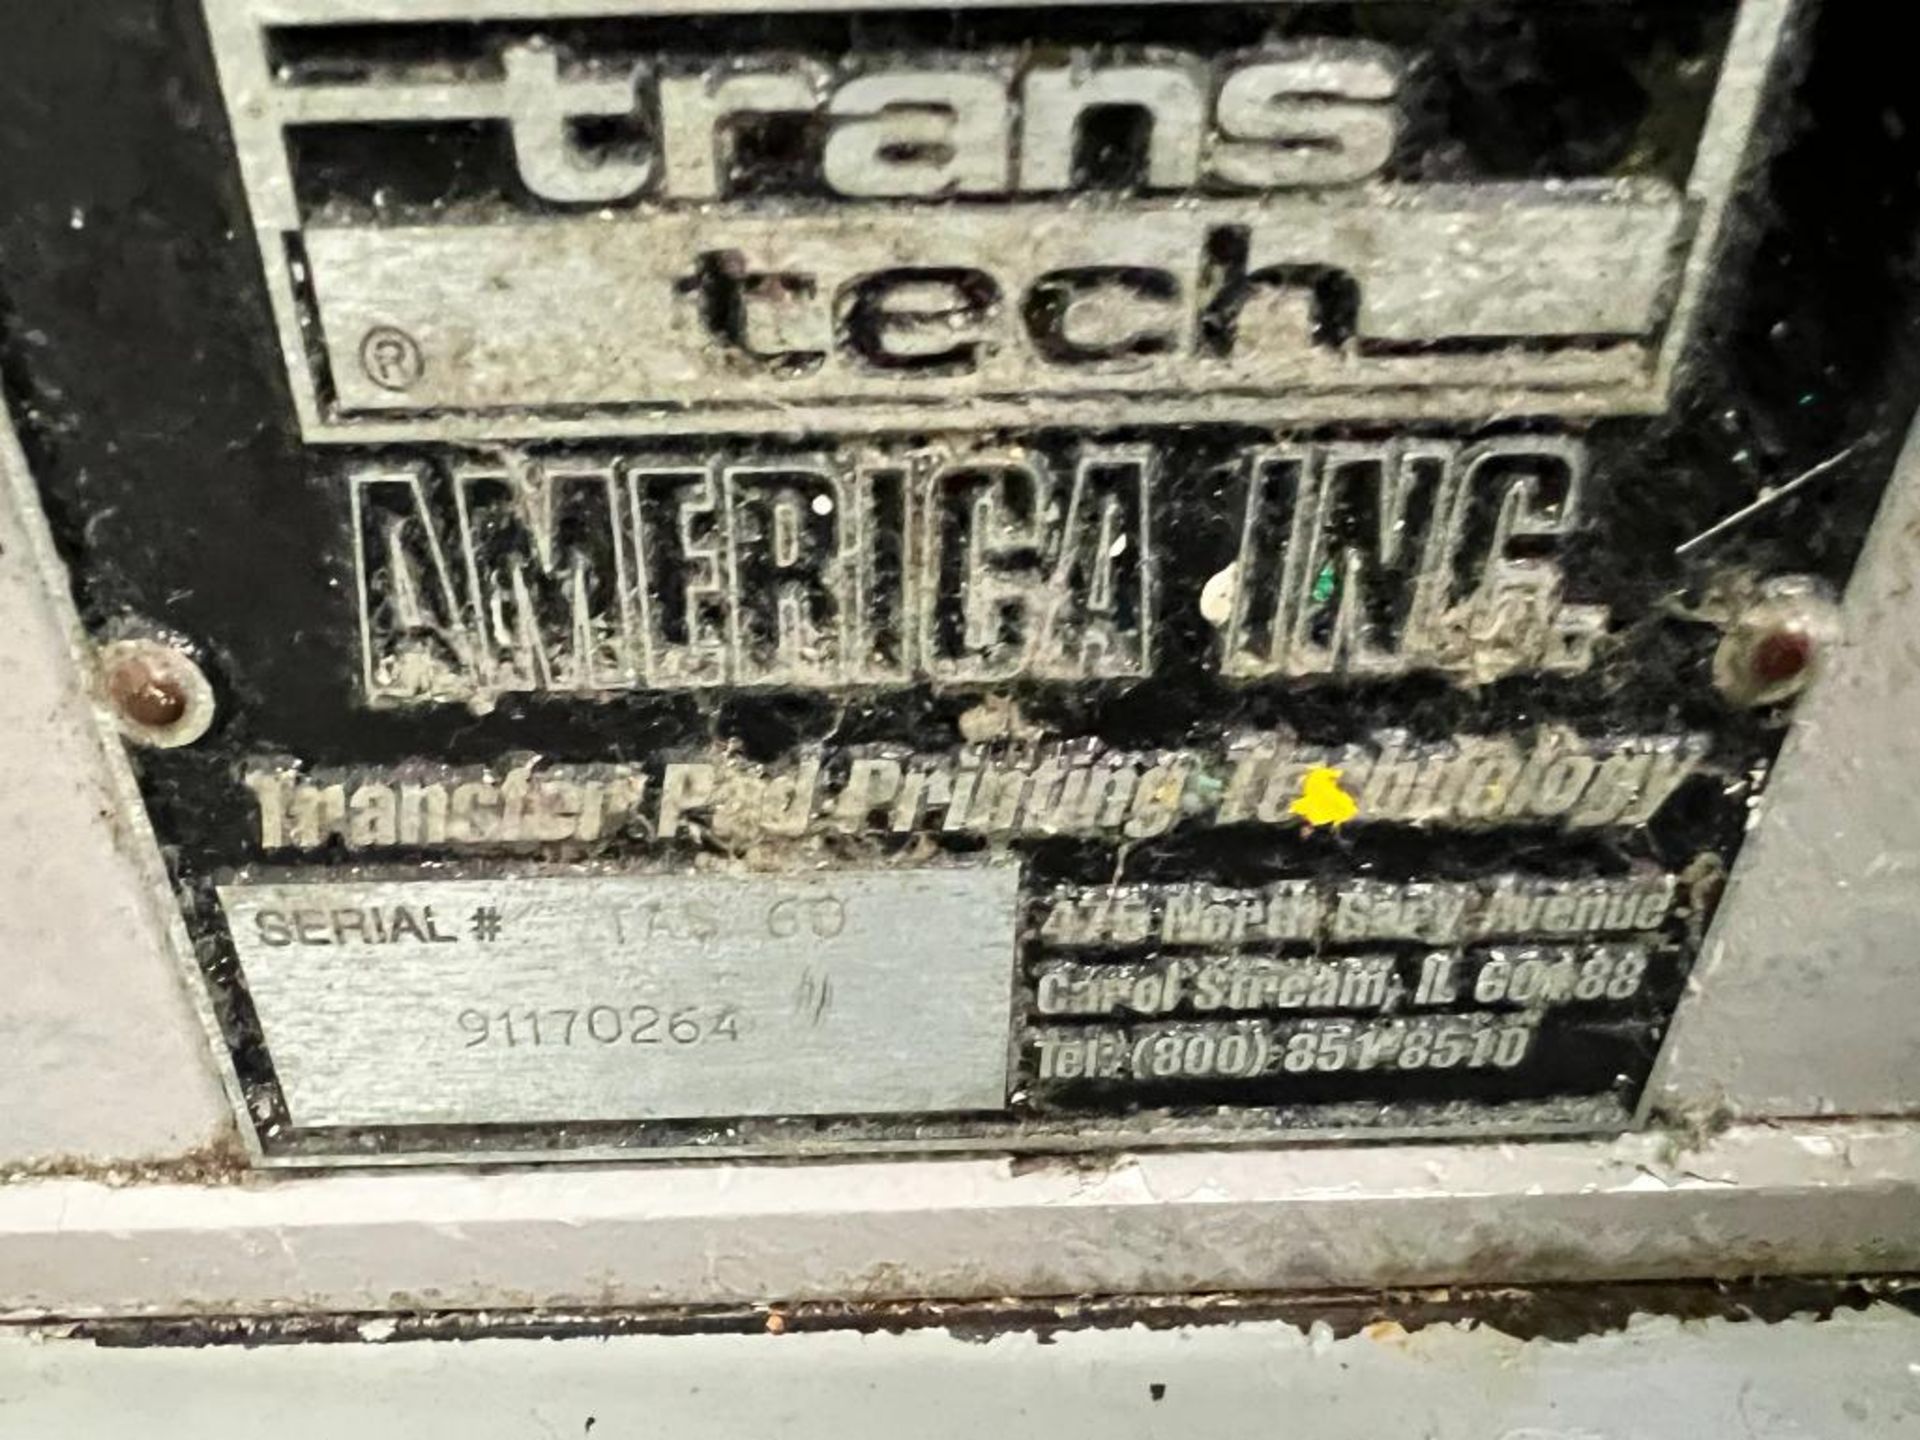 Trans Tech Sealcup 60 Pad Printer, Model TAS-60, S/N 91170264 - Image 4 of 4